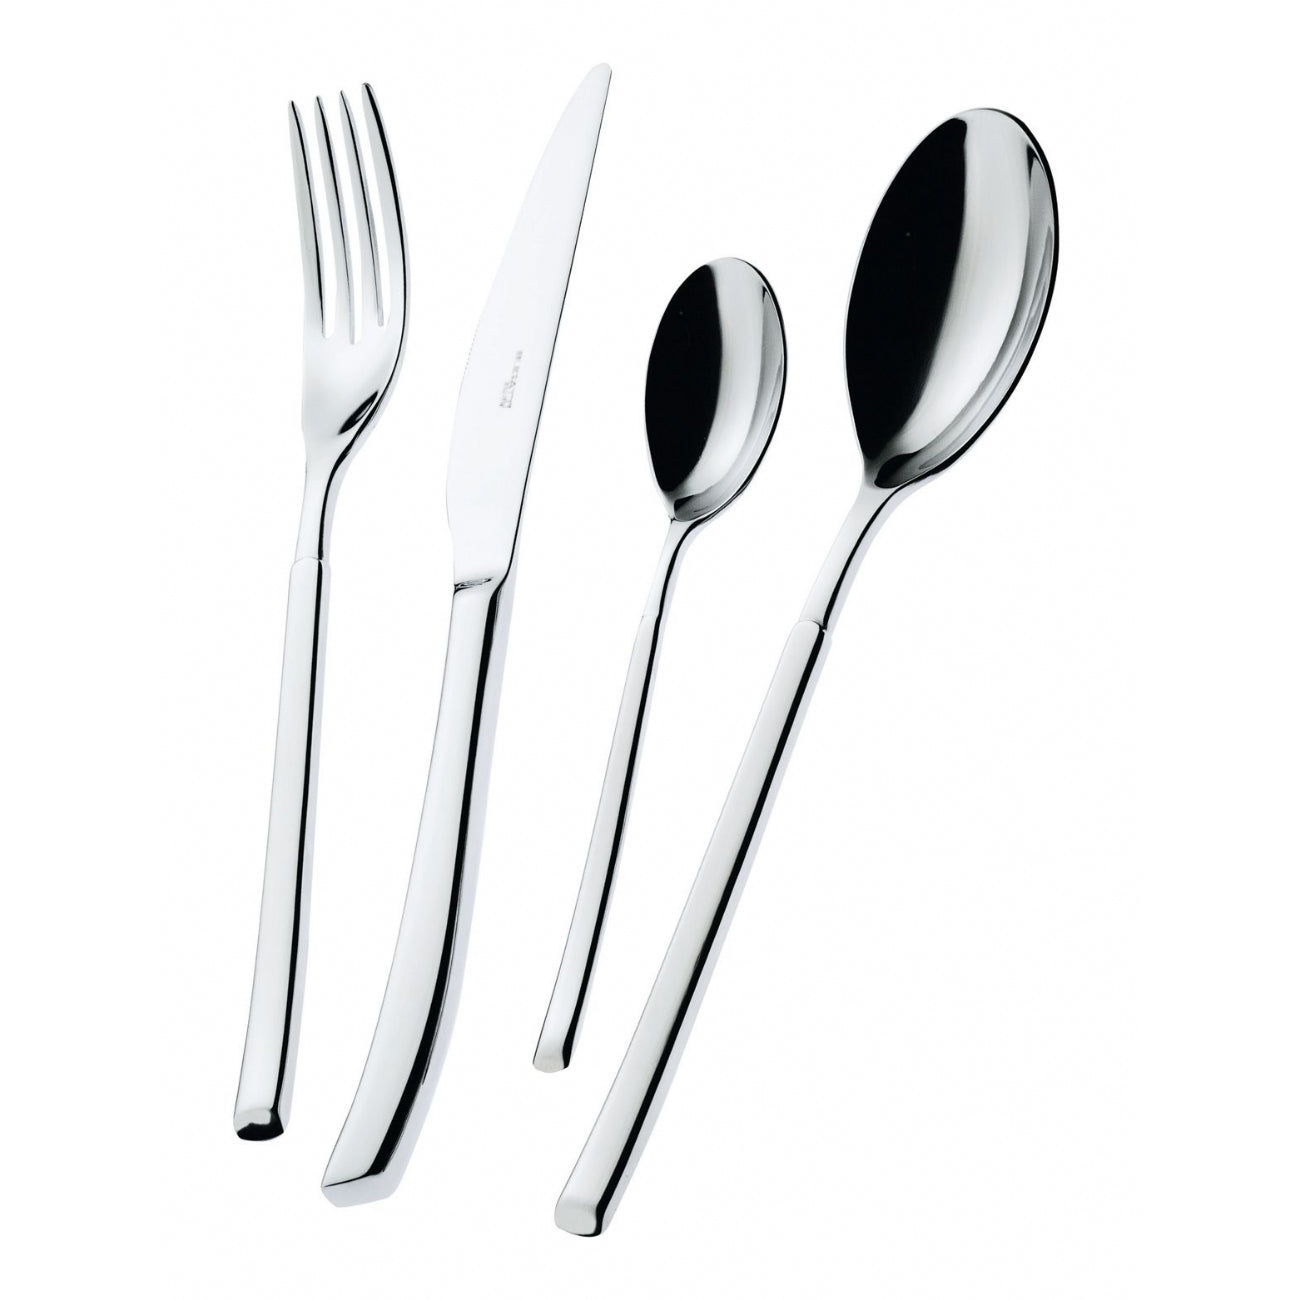 BUGATTI, Portofino 50-piece cutlery set in 18/10 stainless steel